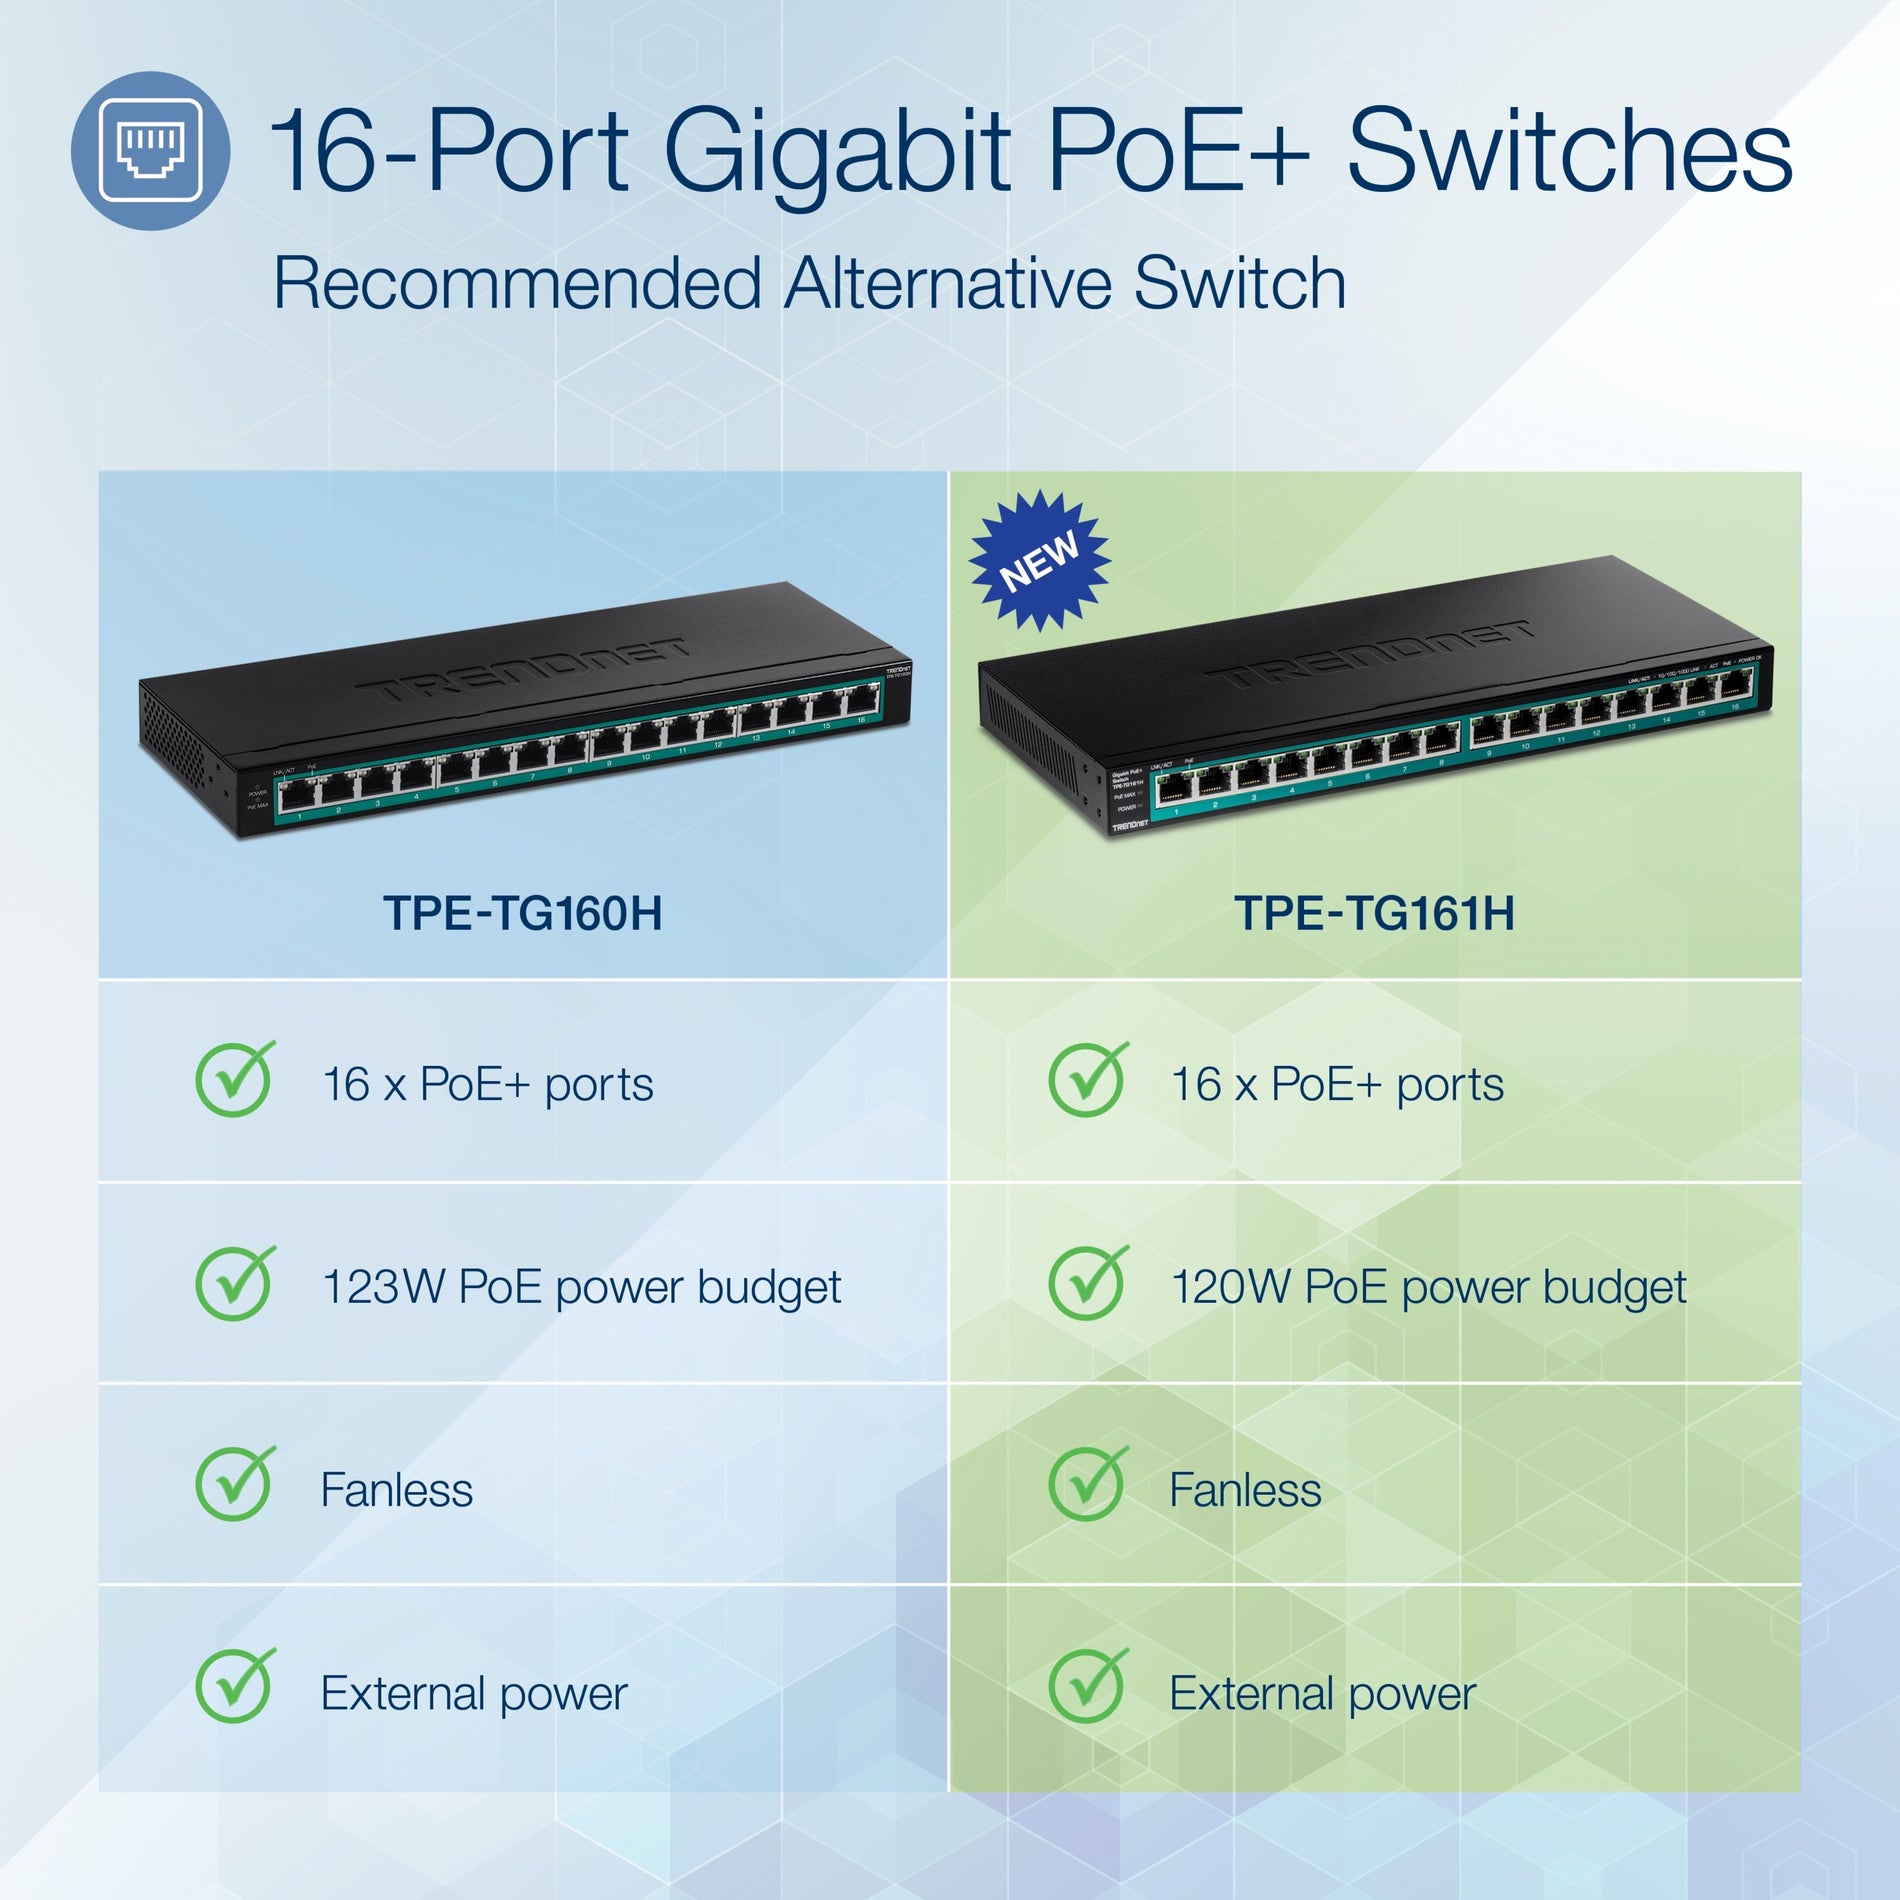 TRENDnet TPE-TG161H 16-Port Gigabit PoE+ Switch, 120W PoE Budget, Fanless, Lifetime Protection